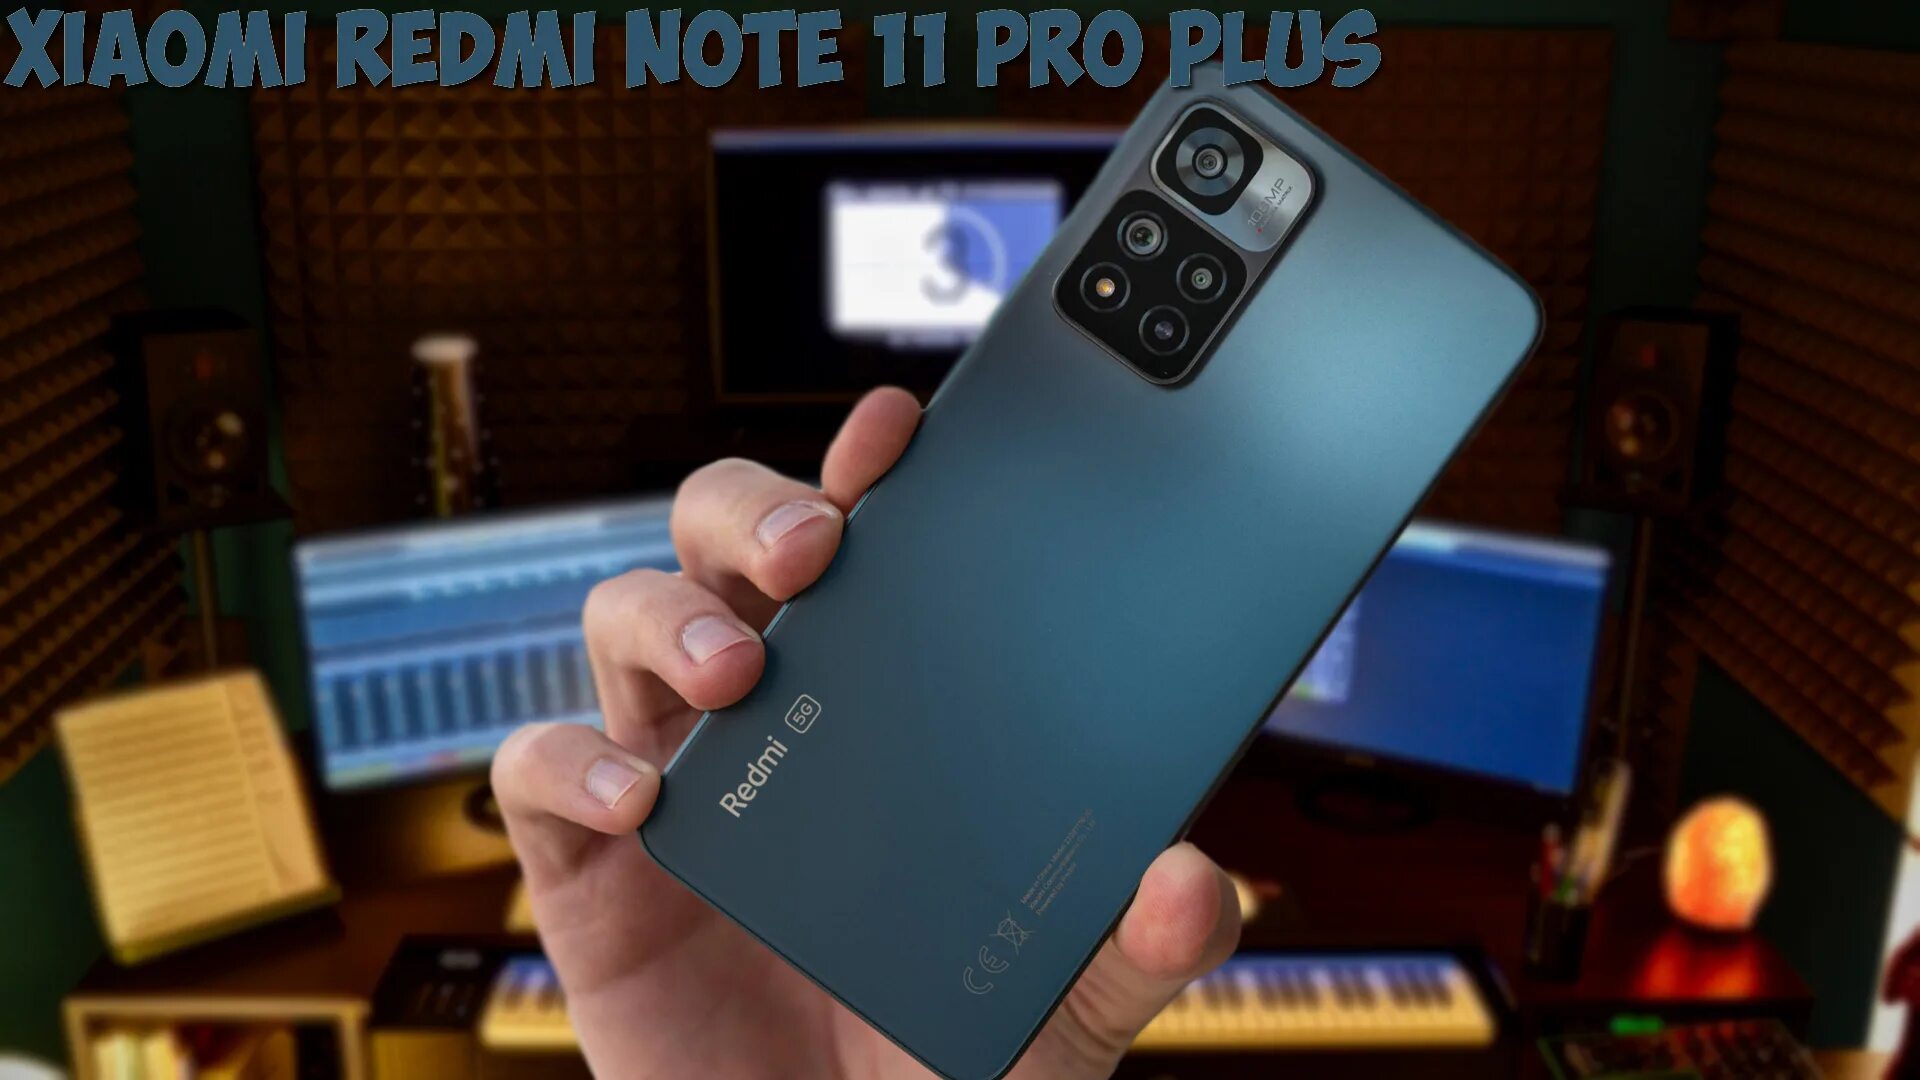 Note 5 pro plus. Xiaomi Redmi Note 11 Pro Plus 5g. Redmi 11t Pro Plus. Redmi Note 5 Pro. Redmi Note 11 Pro плюс.